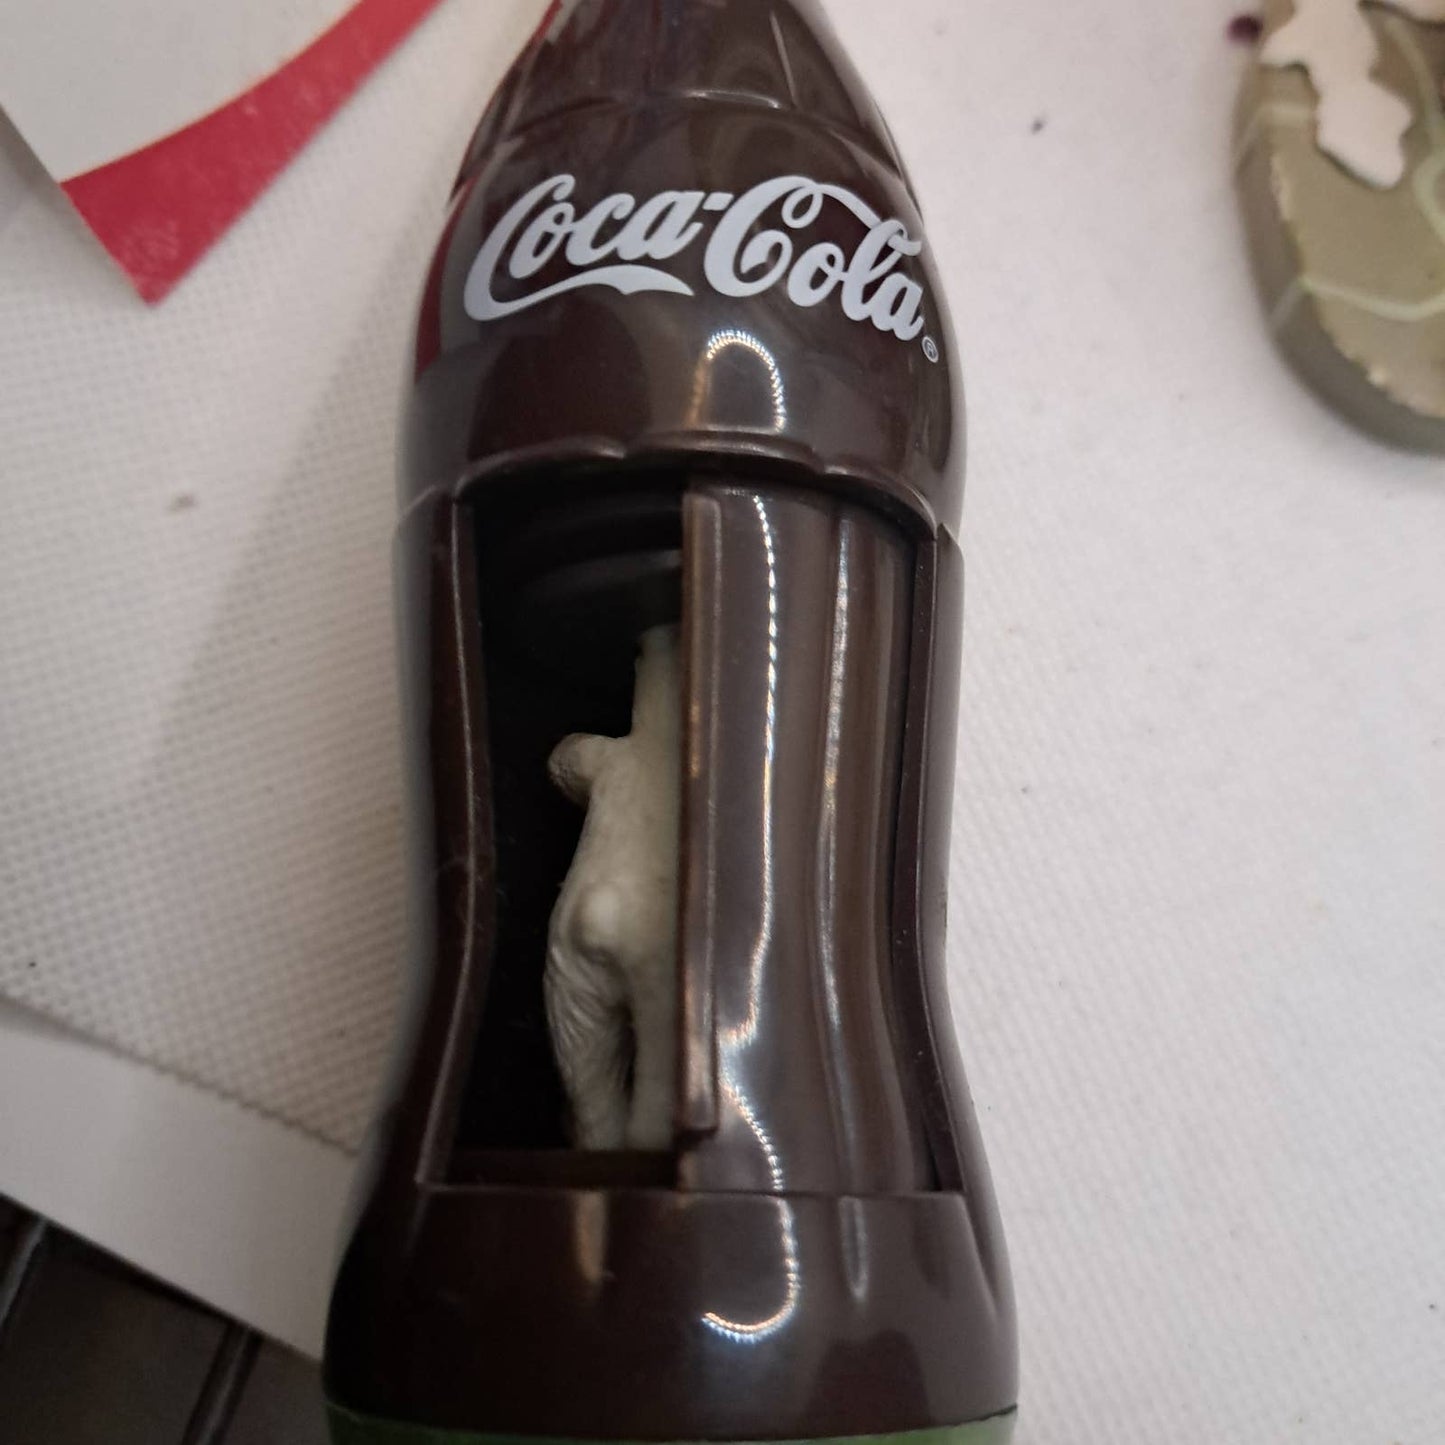 Vintage Coca Cola Ceramic Figurines & Tray Plus Twirling Coca Cola PolarBear and